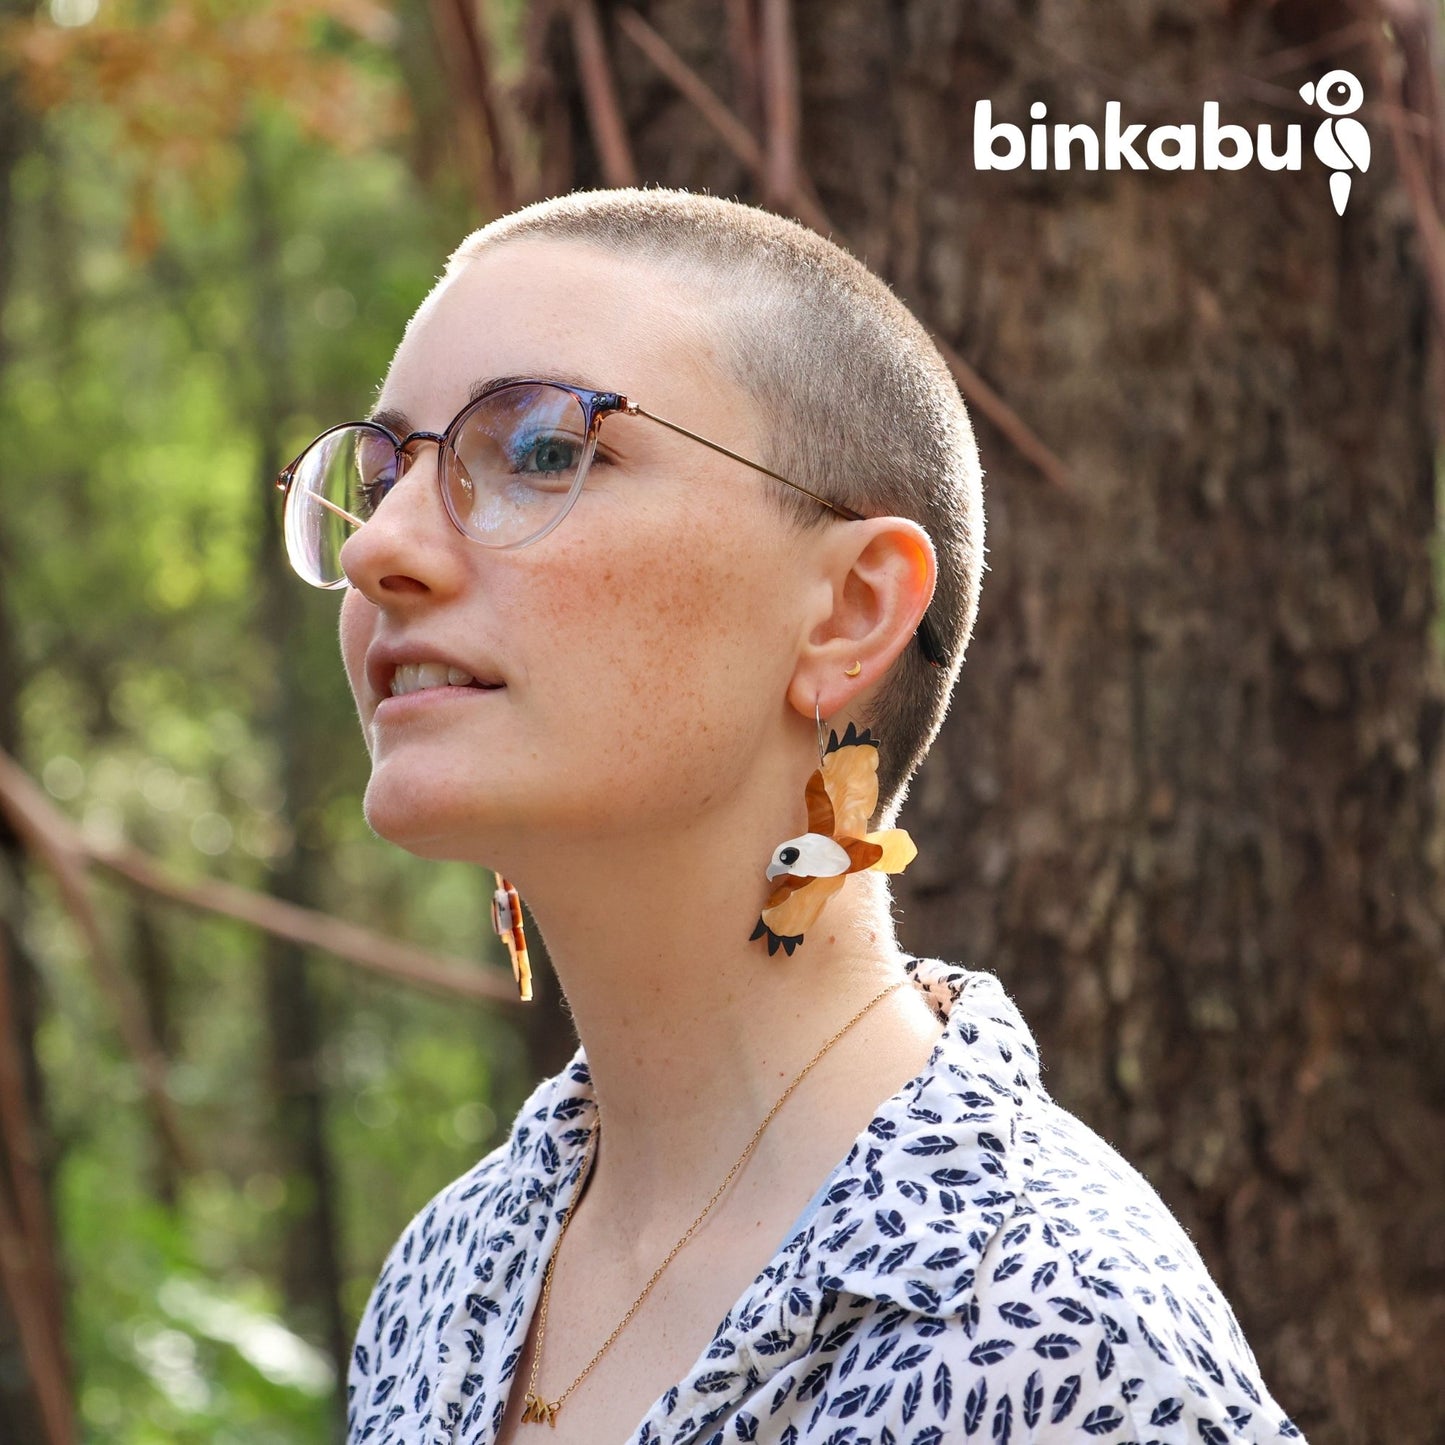 BINKABU Brahminy Kite Acrylic Bird Earrings